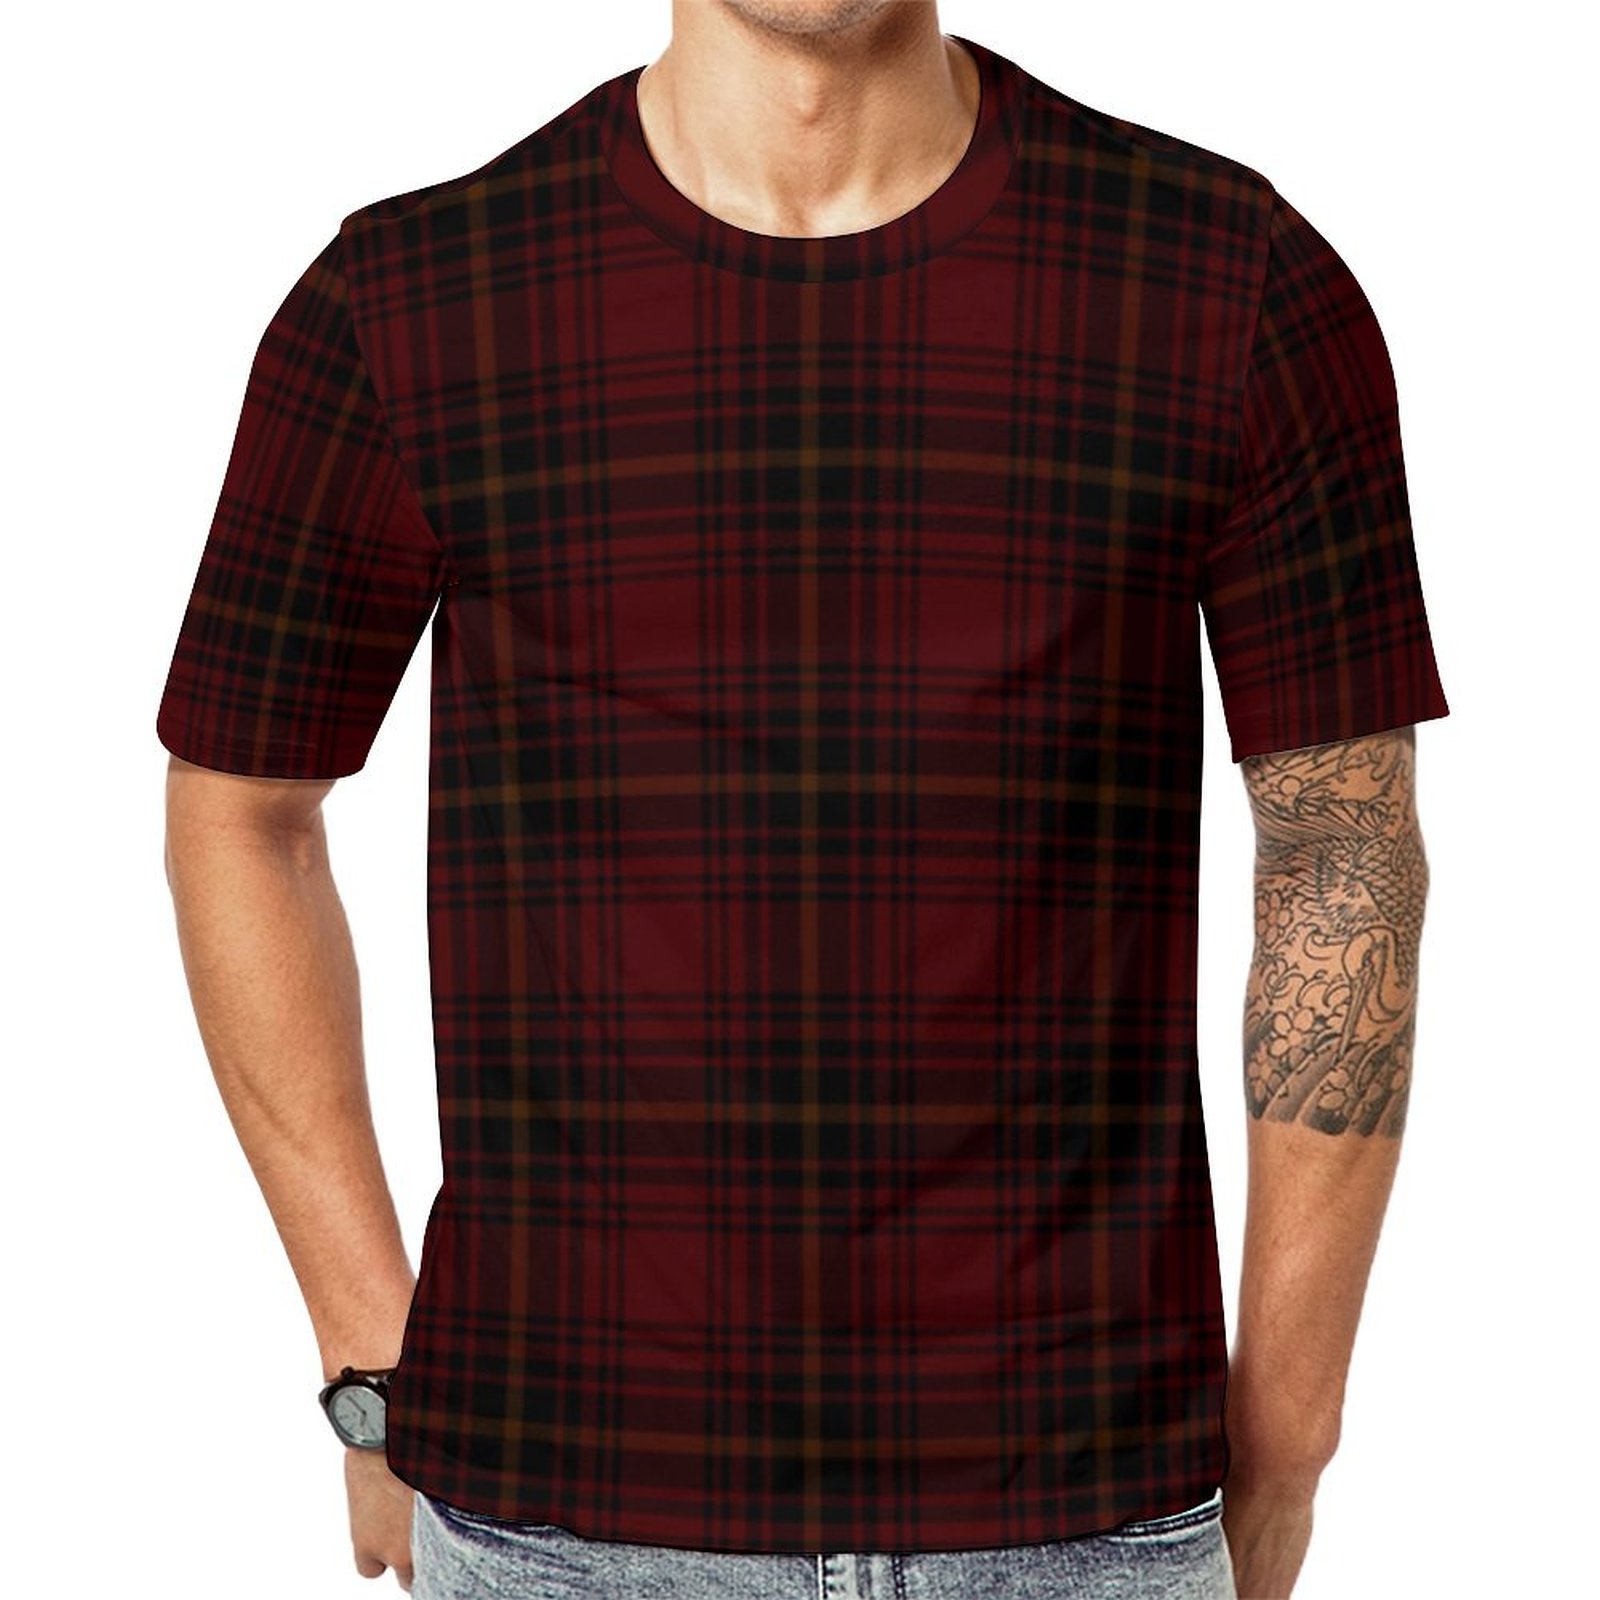 Red And Black Scottish Tartan Plaid  Short Sleeve Print Unisex Tshirt Summer Casual Tees for Men and Women Coolcoshirts